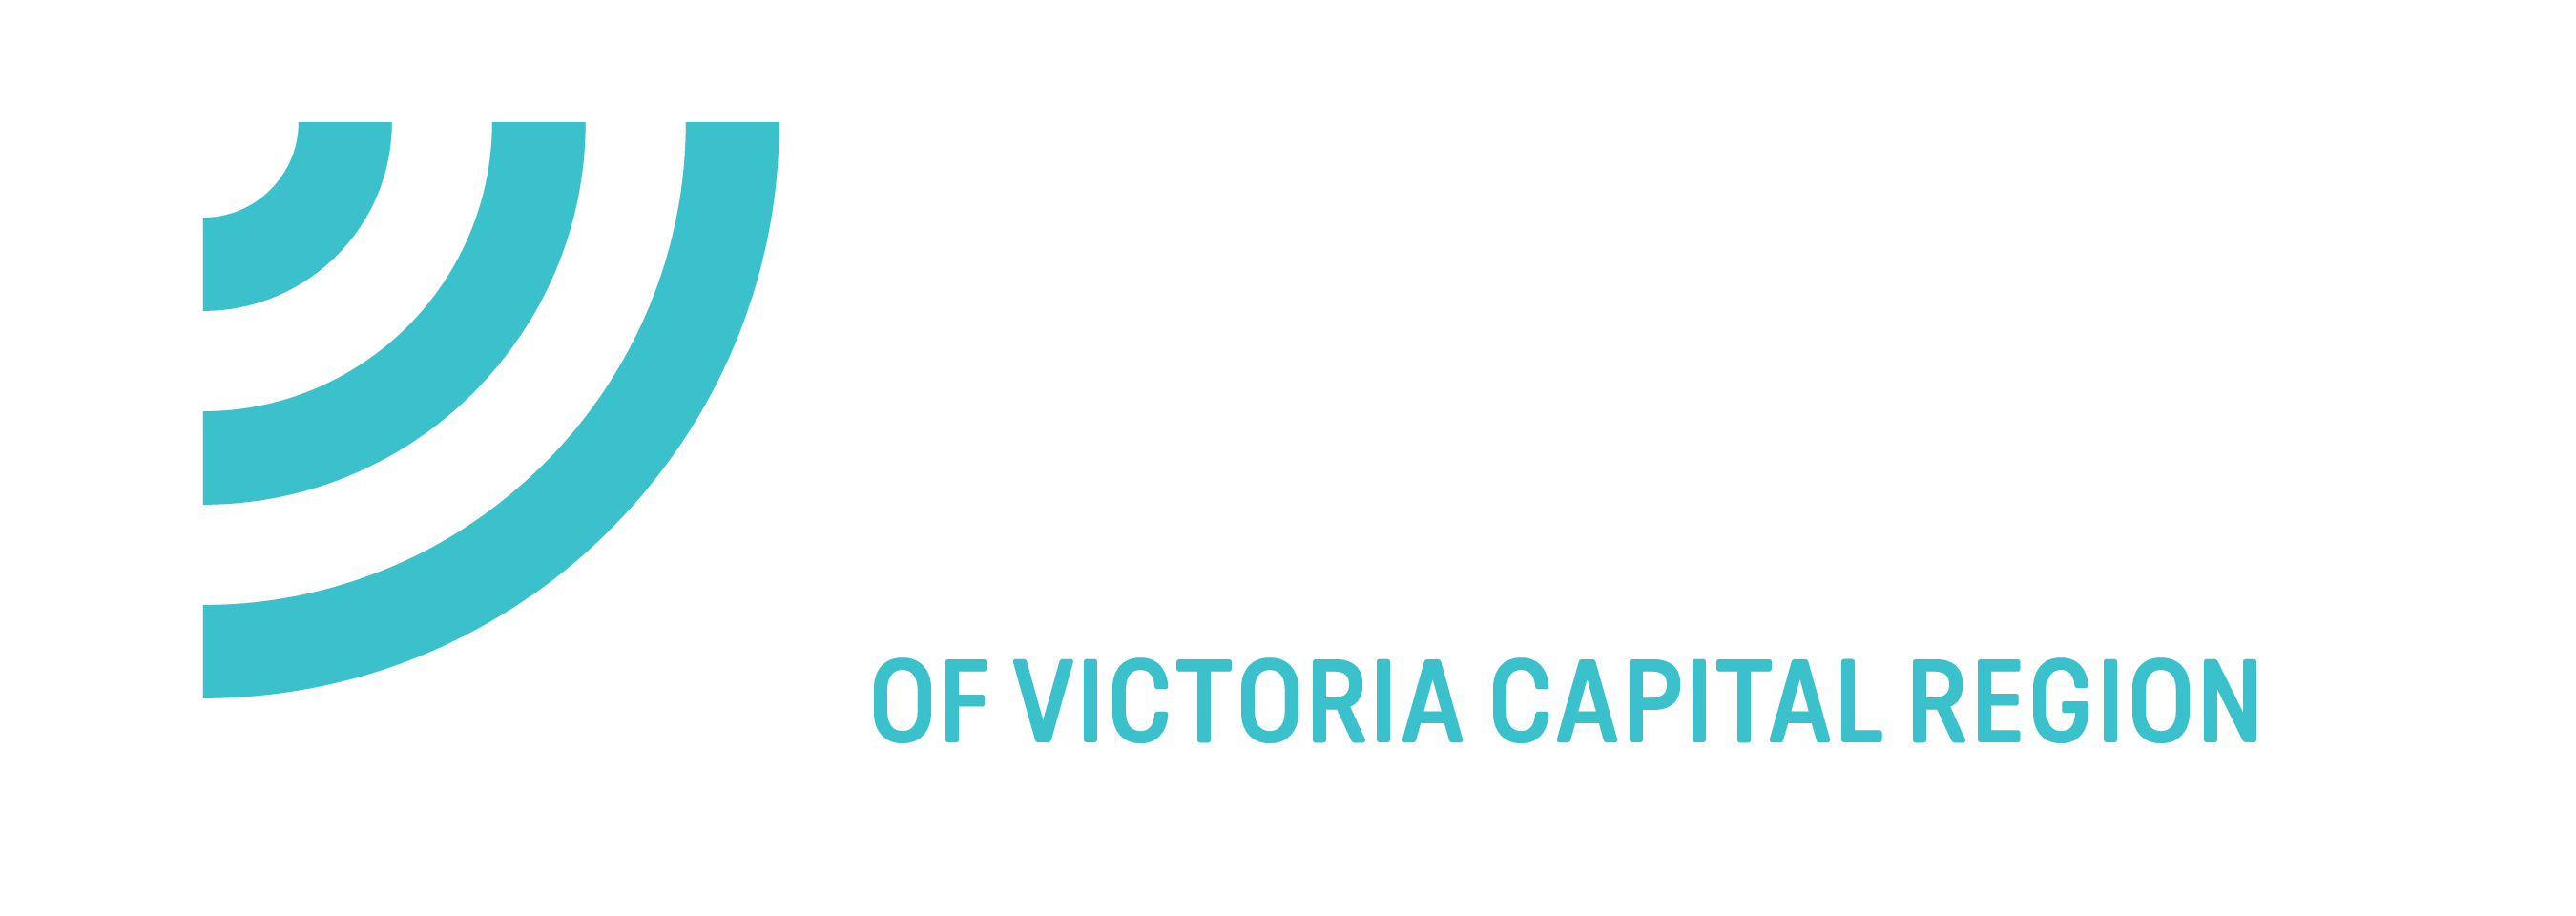 Volunteer to help our Social Enterprise - Big Brothers Big Sisters of Victoria Capital Region